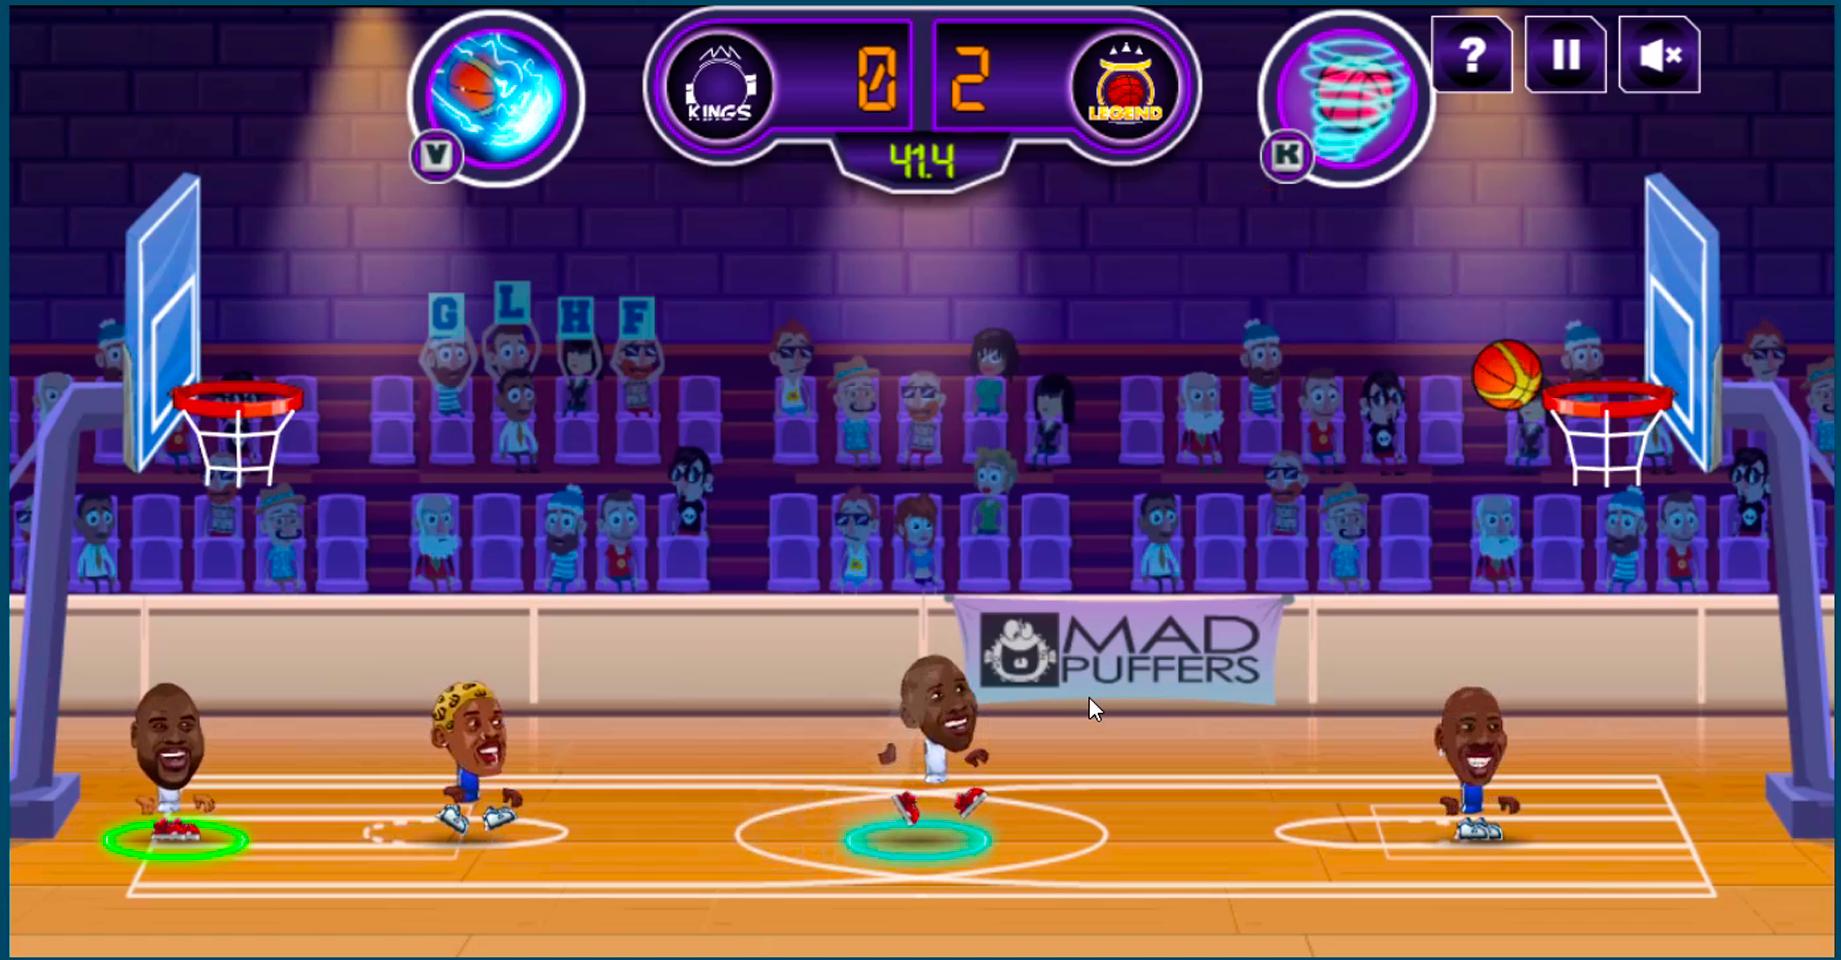 Y8 Games Arcade APK for Android Download